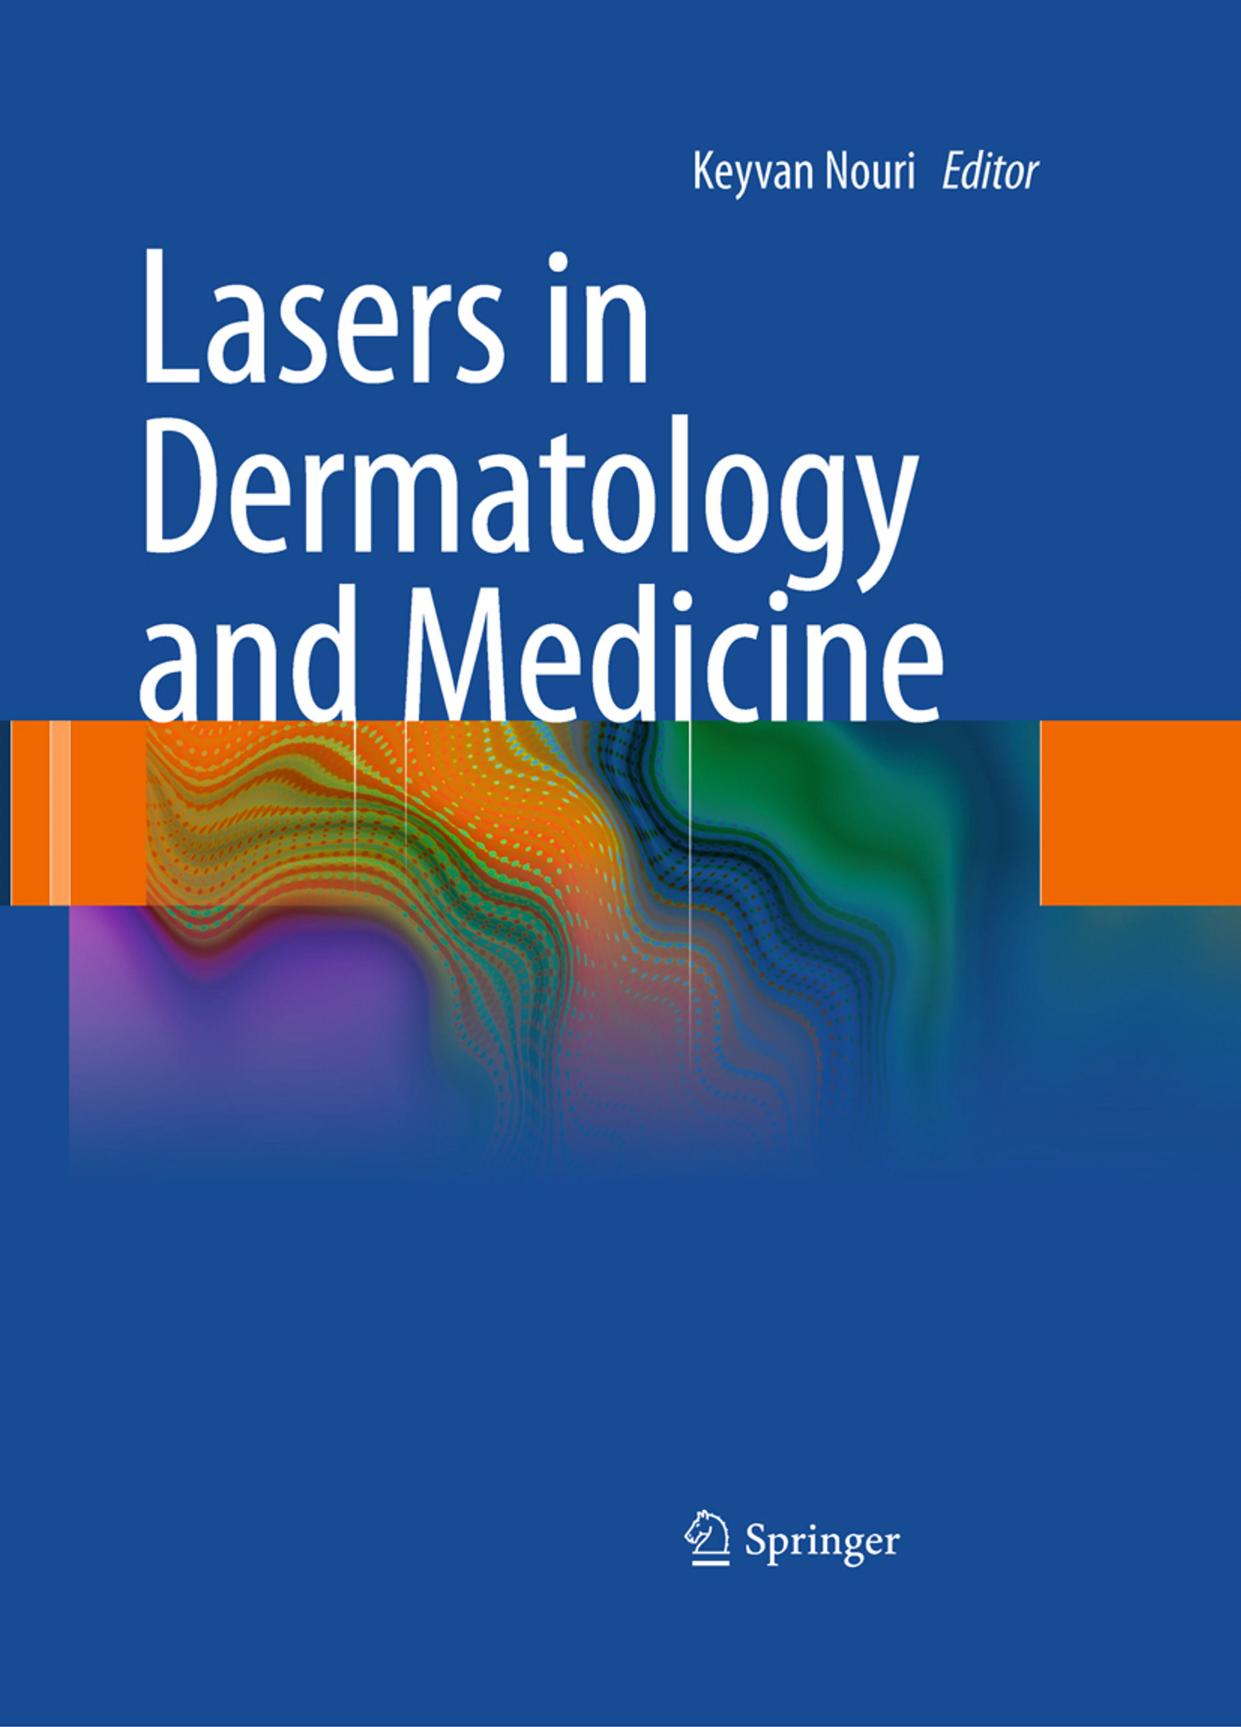 Lasers in Dermatology and Medicine by Keyvan Nouri